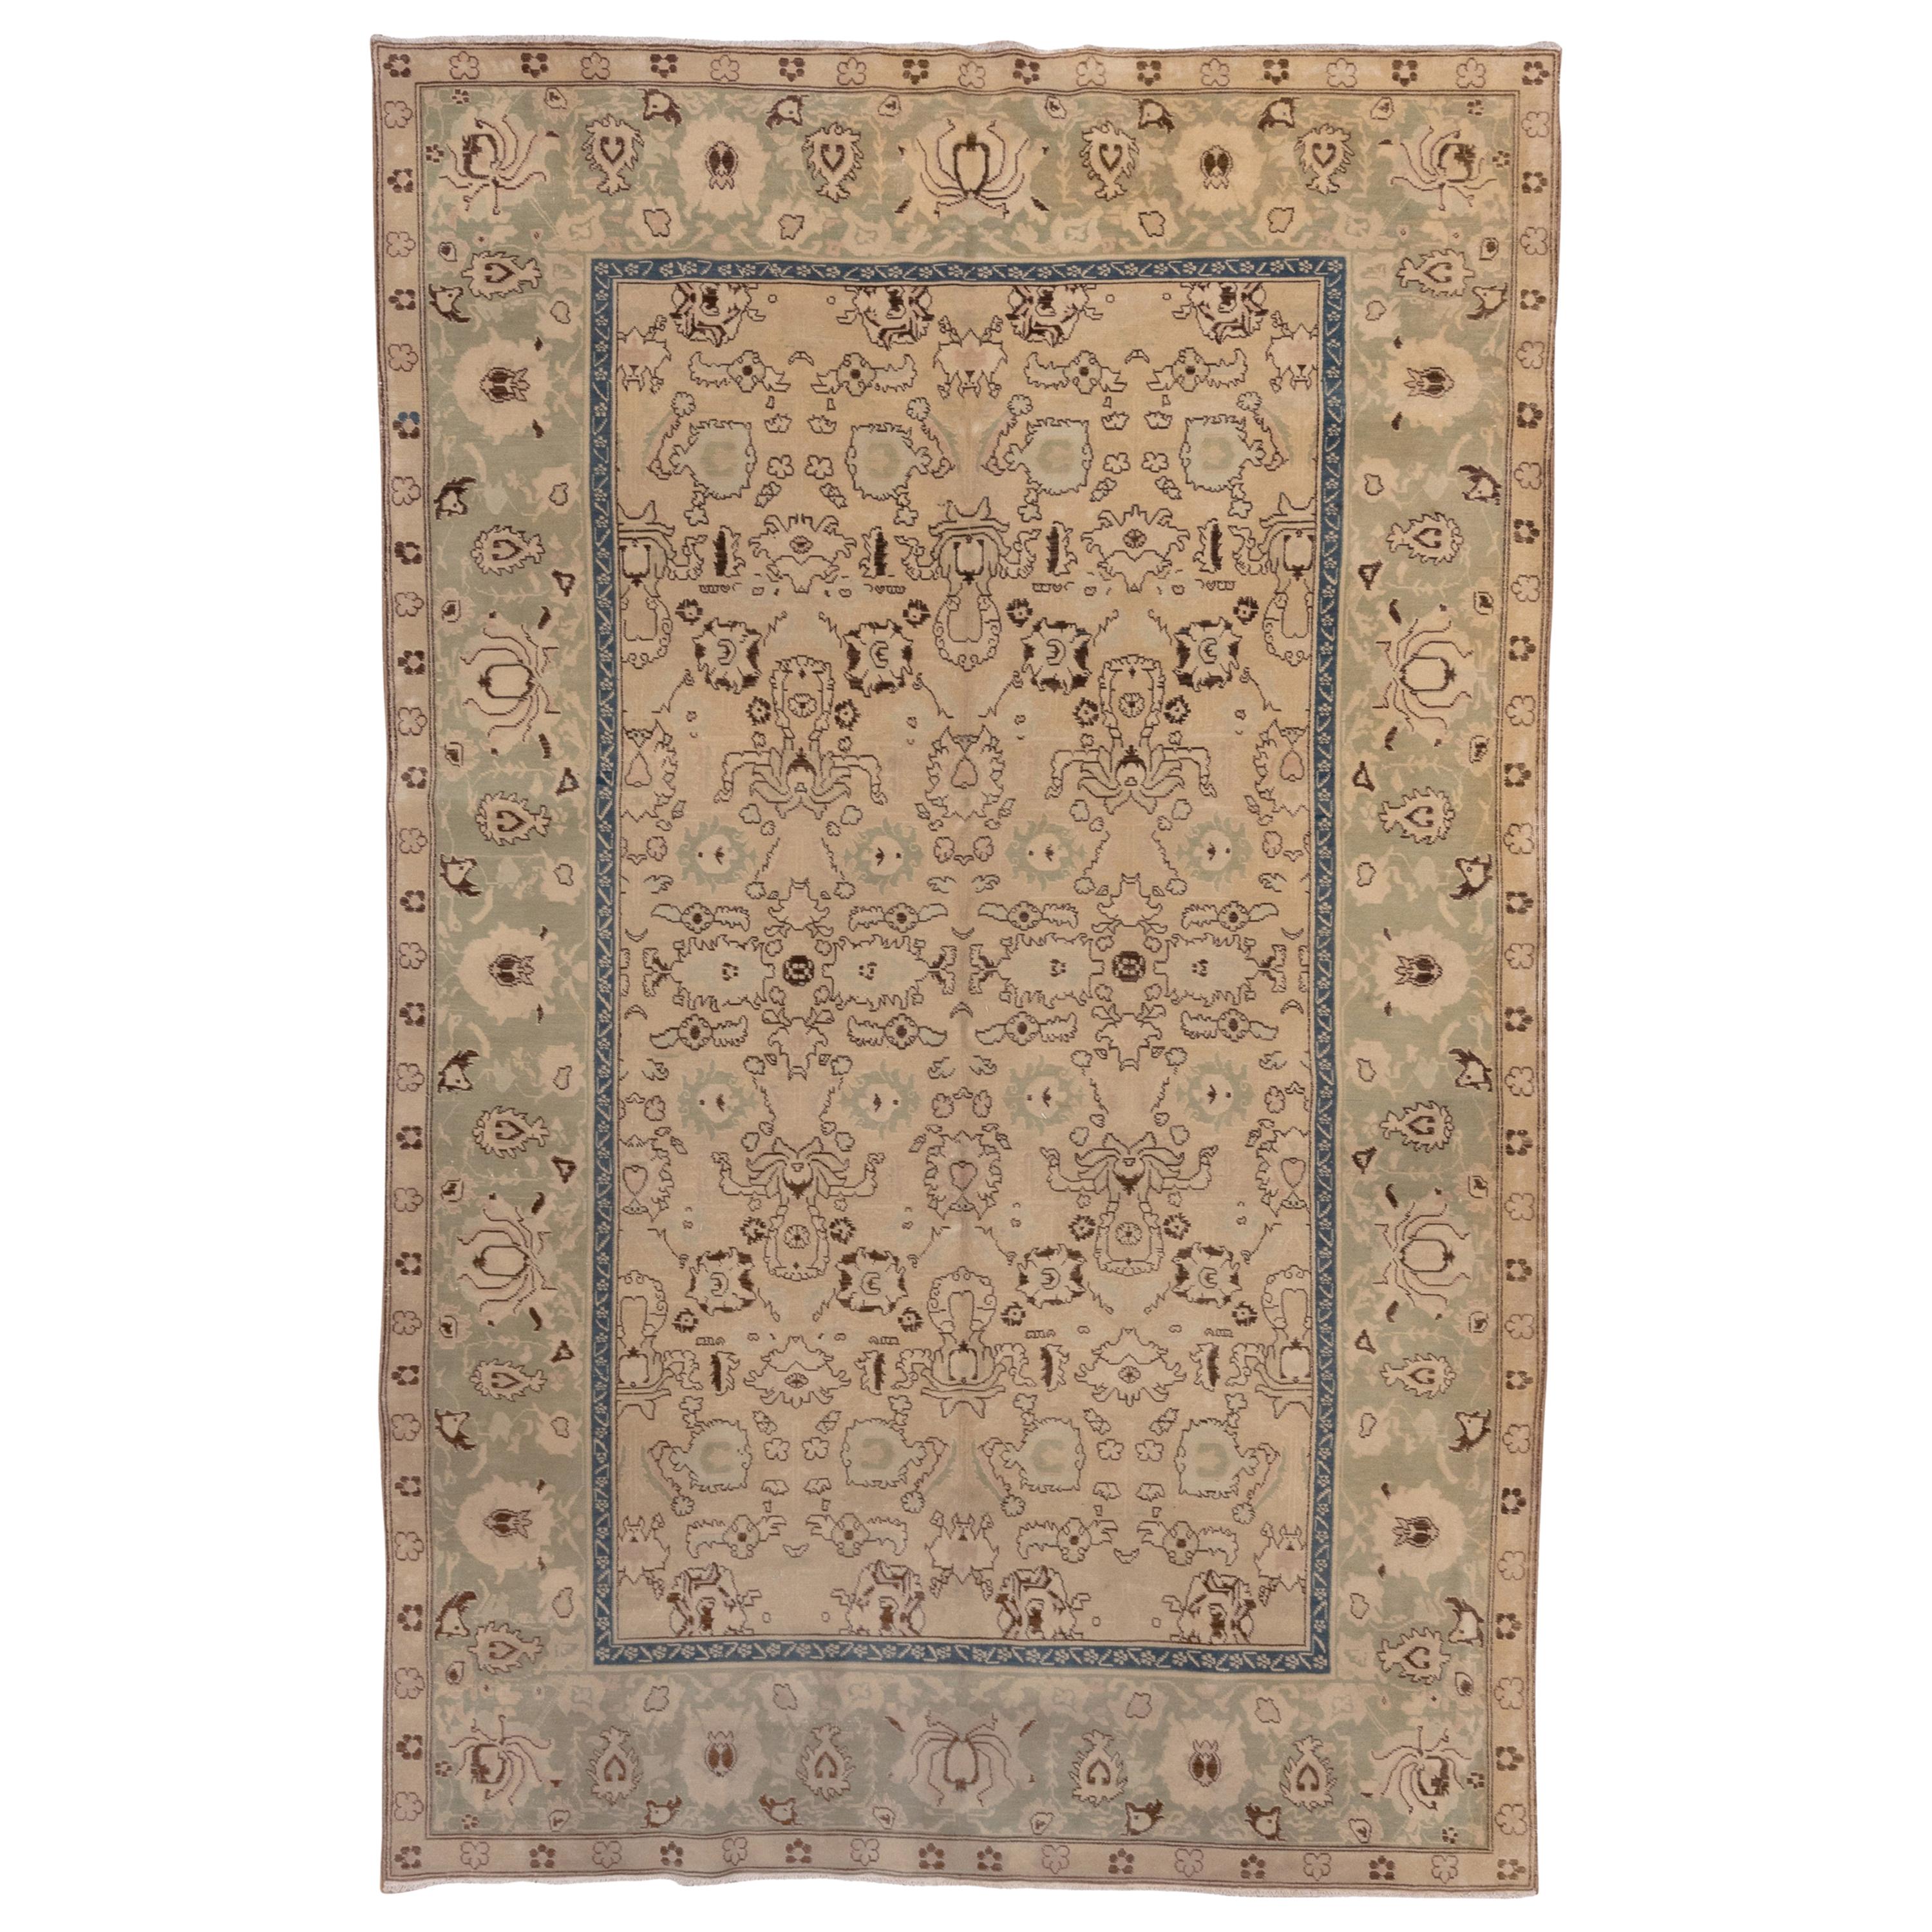 Small Antique Indian Agra Carpet, circa 1920s, Soft Palette